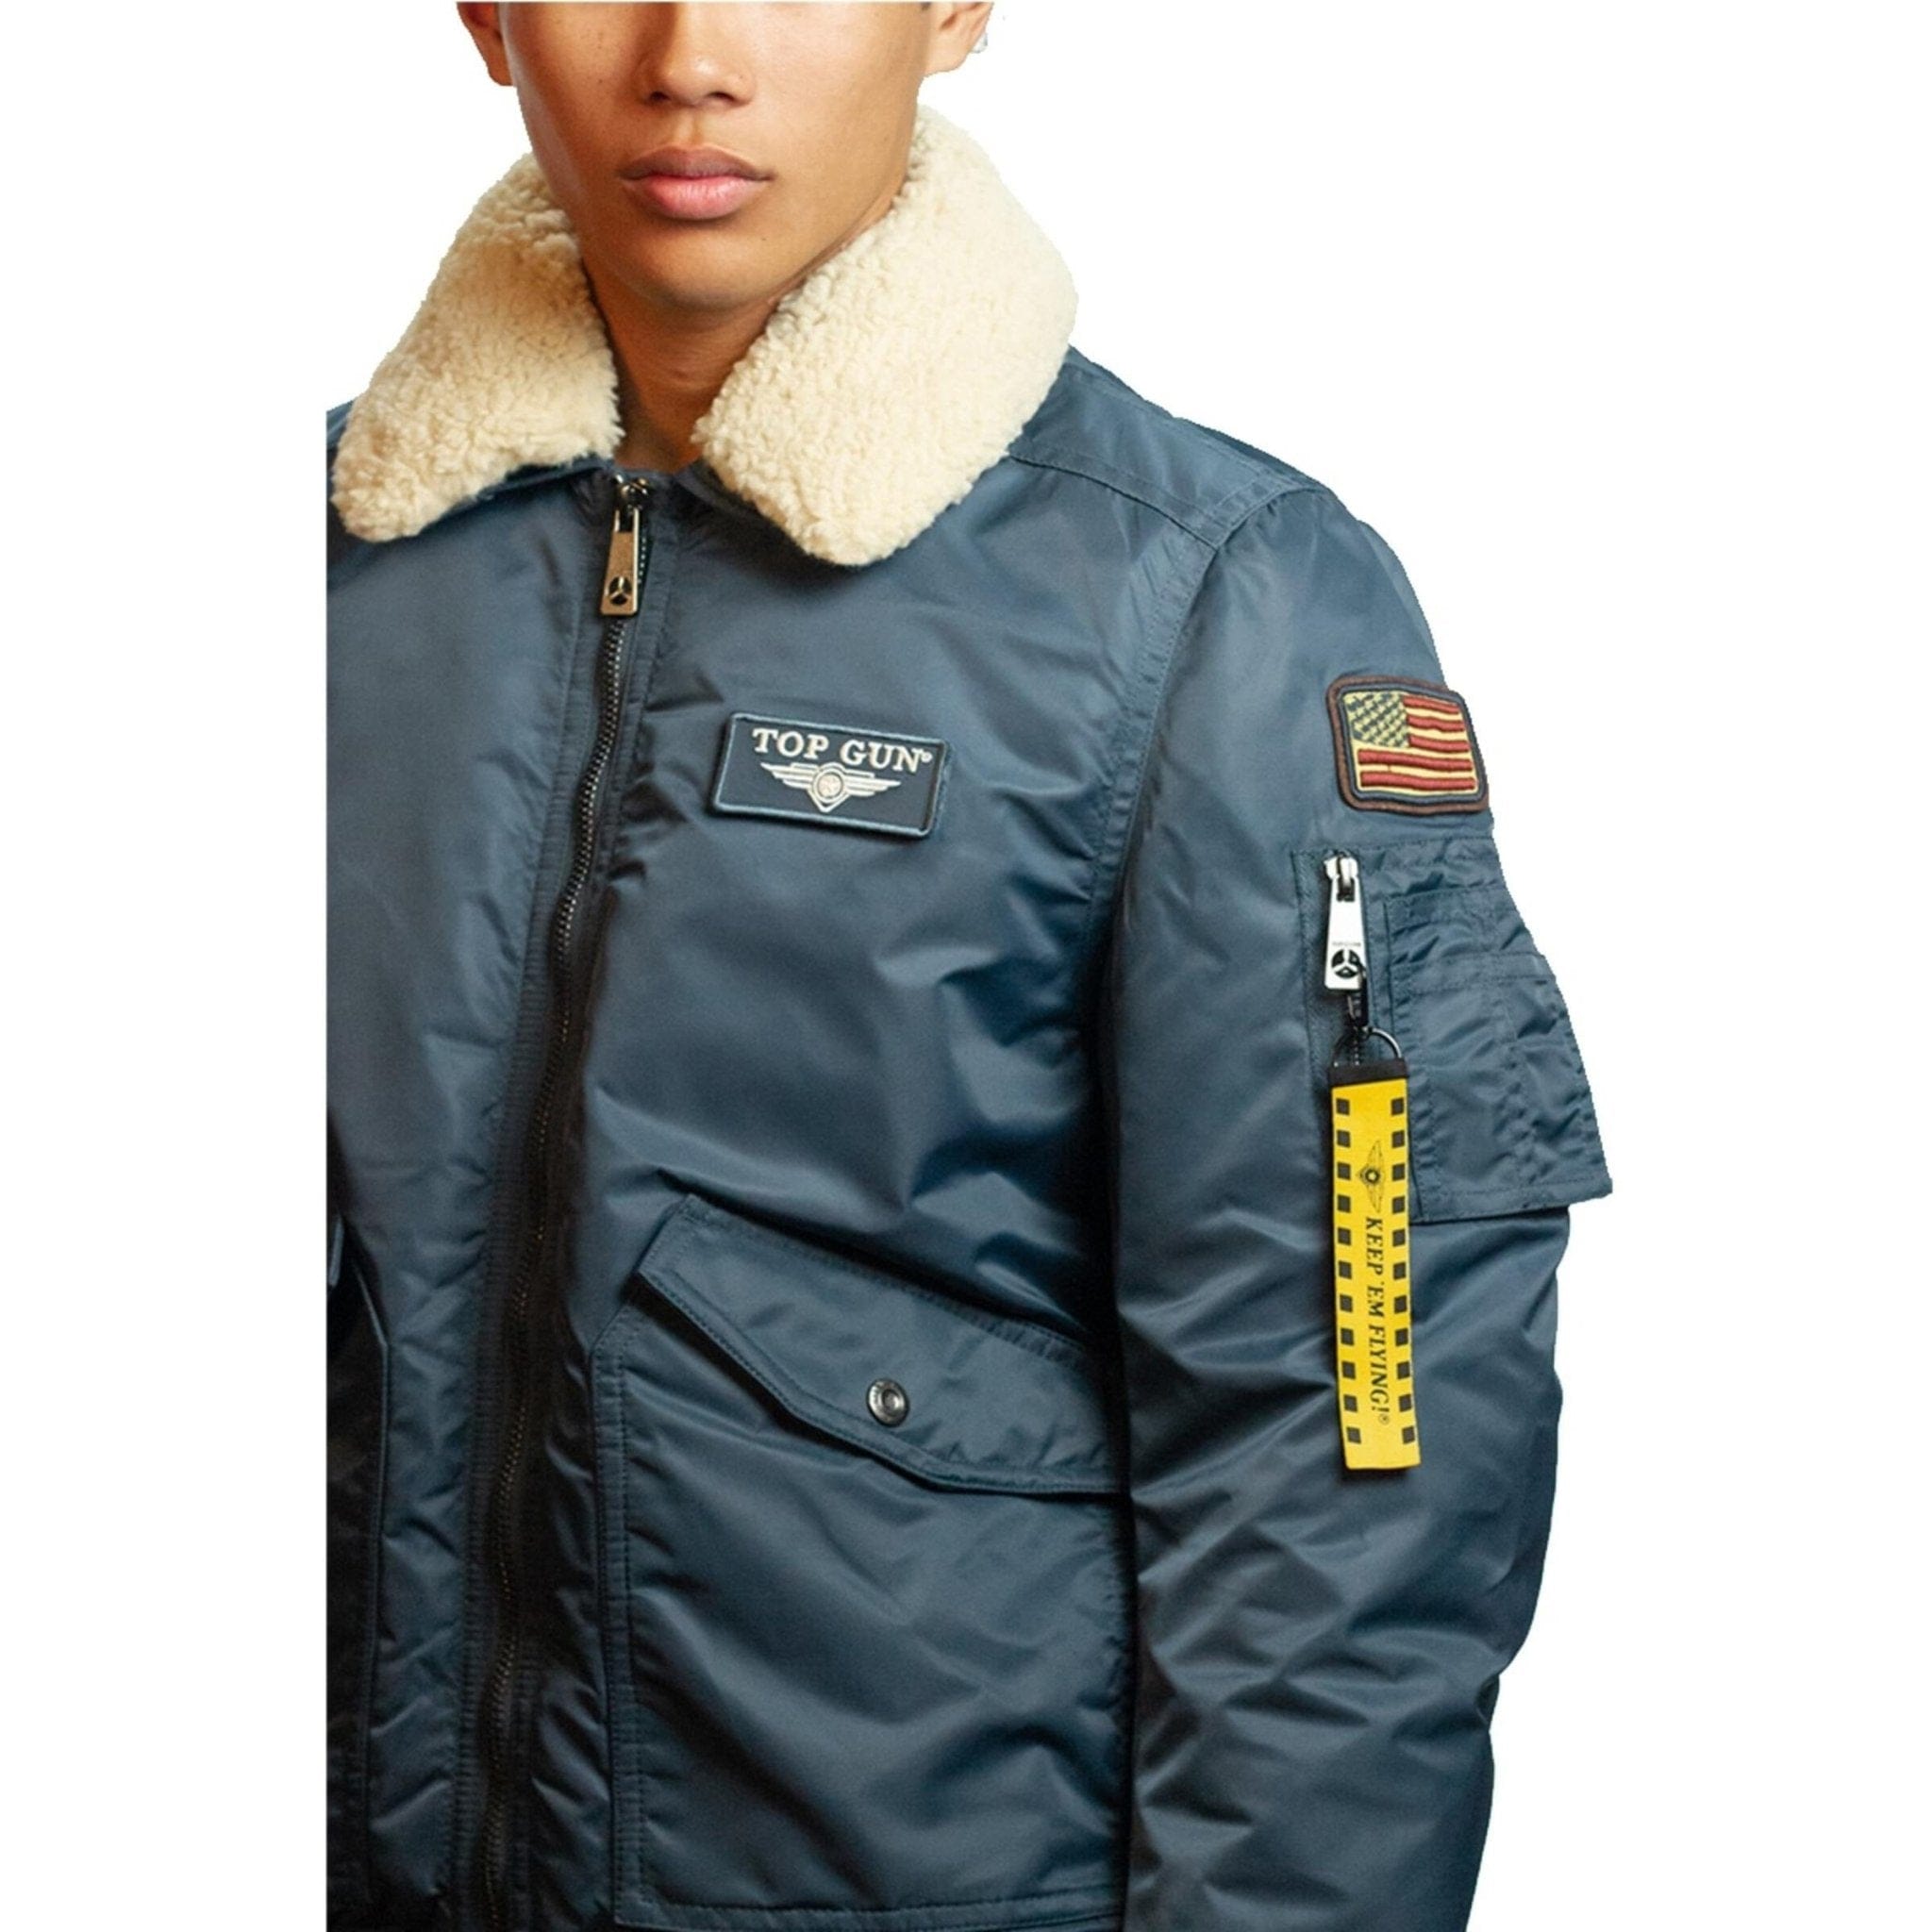 Top Gun® Official CWU-45P Nylon Jacket with Fur - PilotMall.com